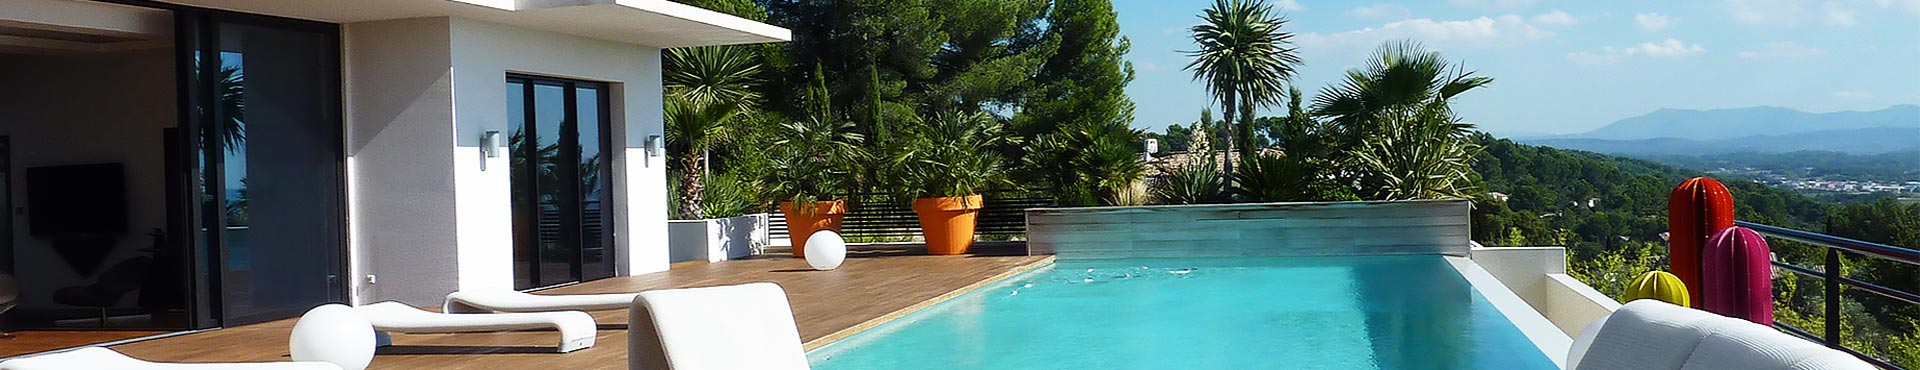 Real estate agency Aix en Provence